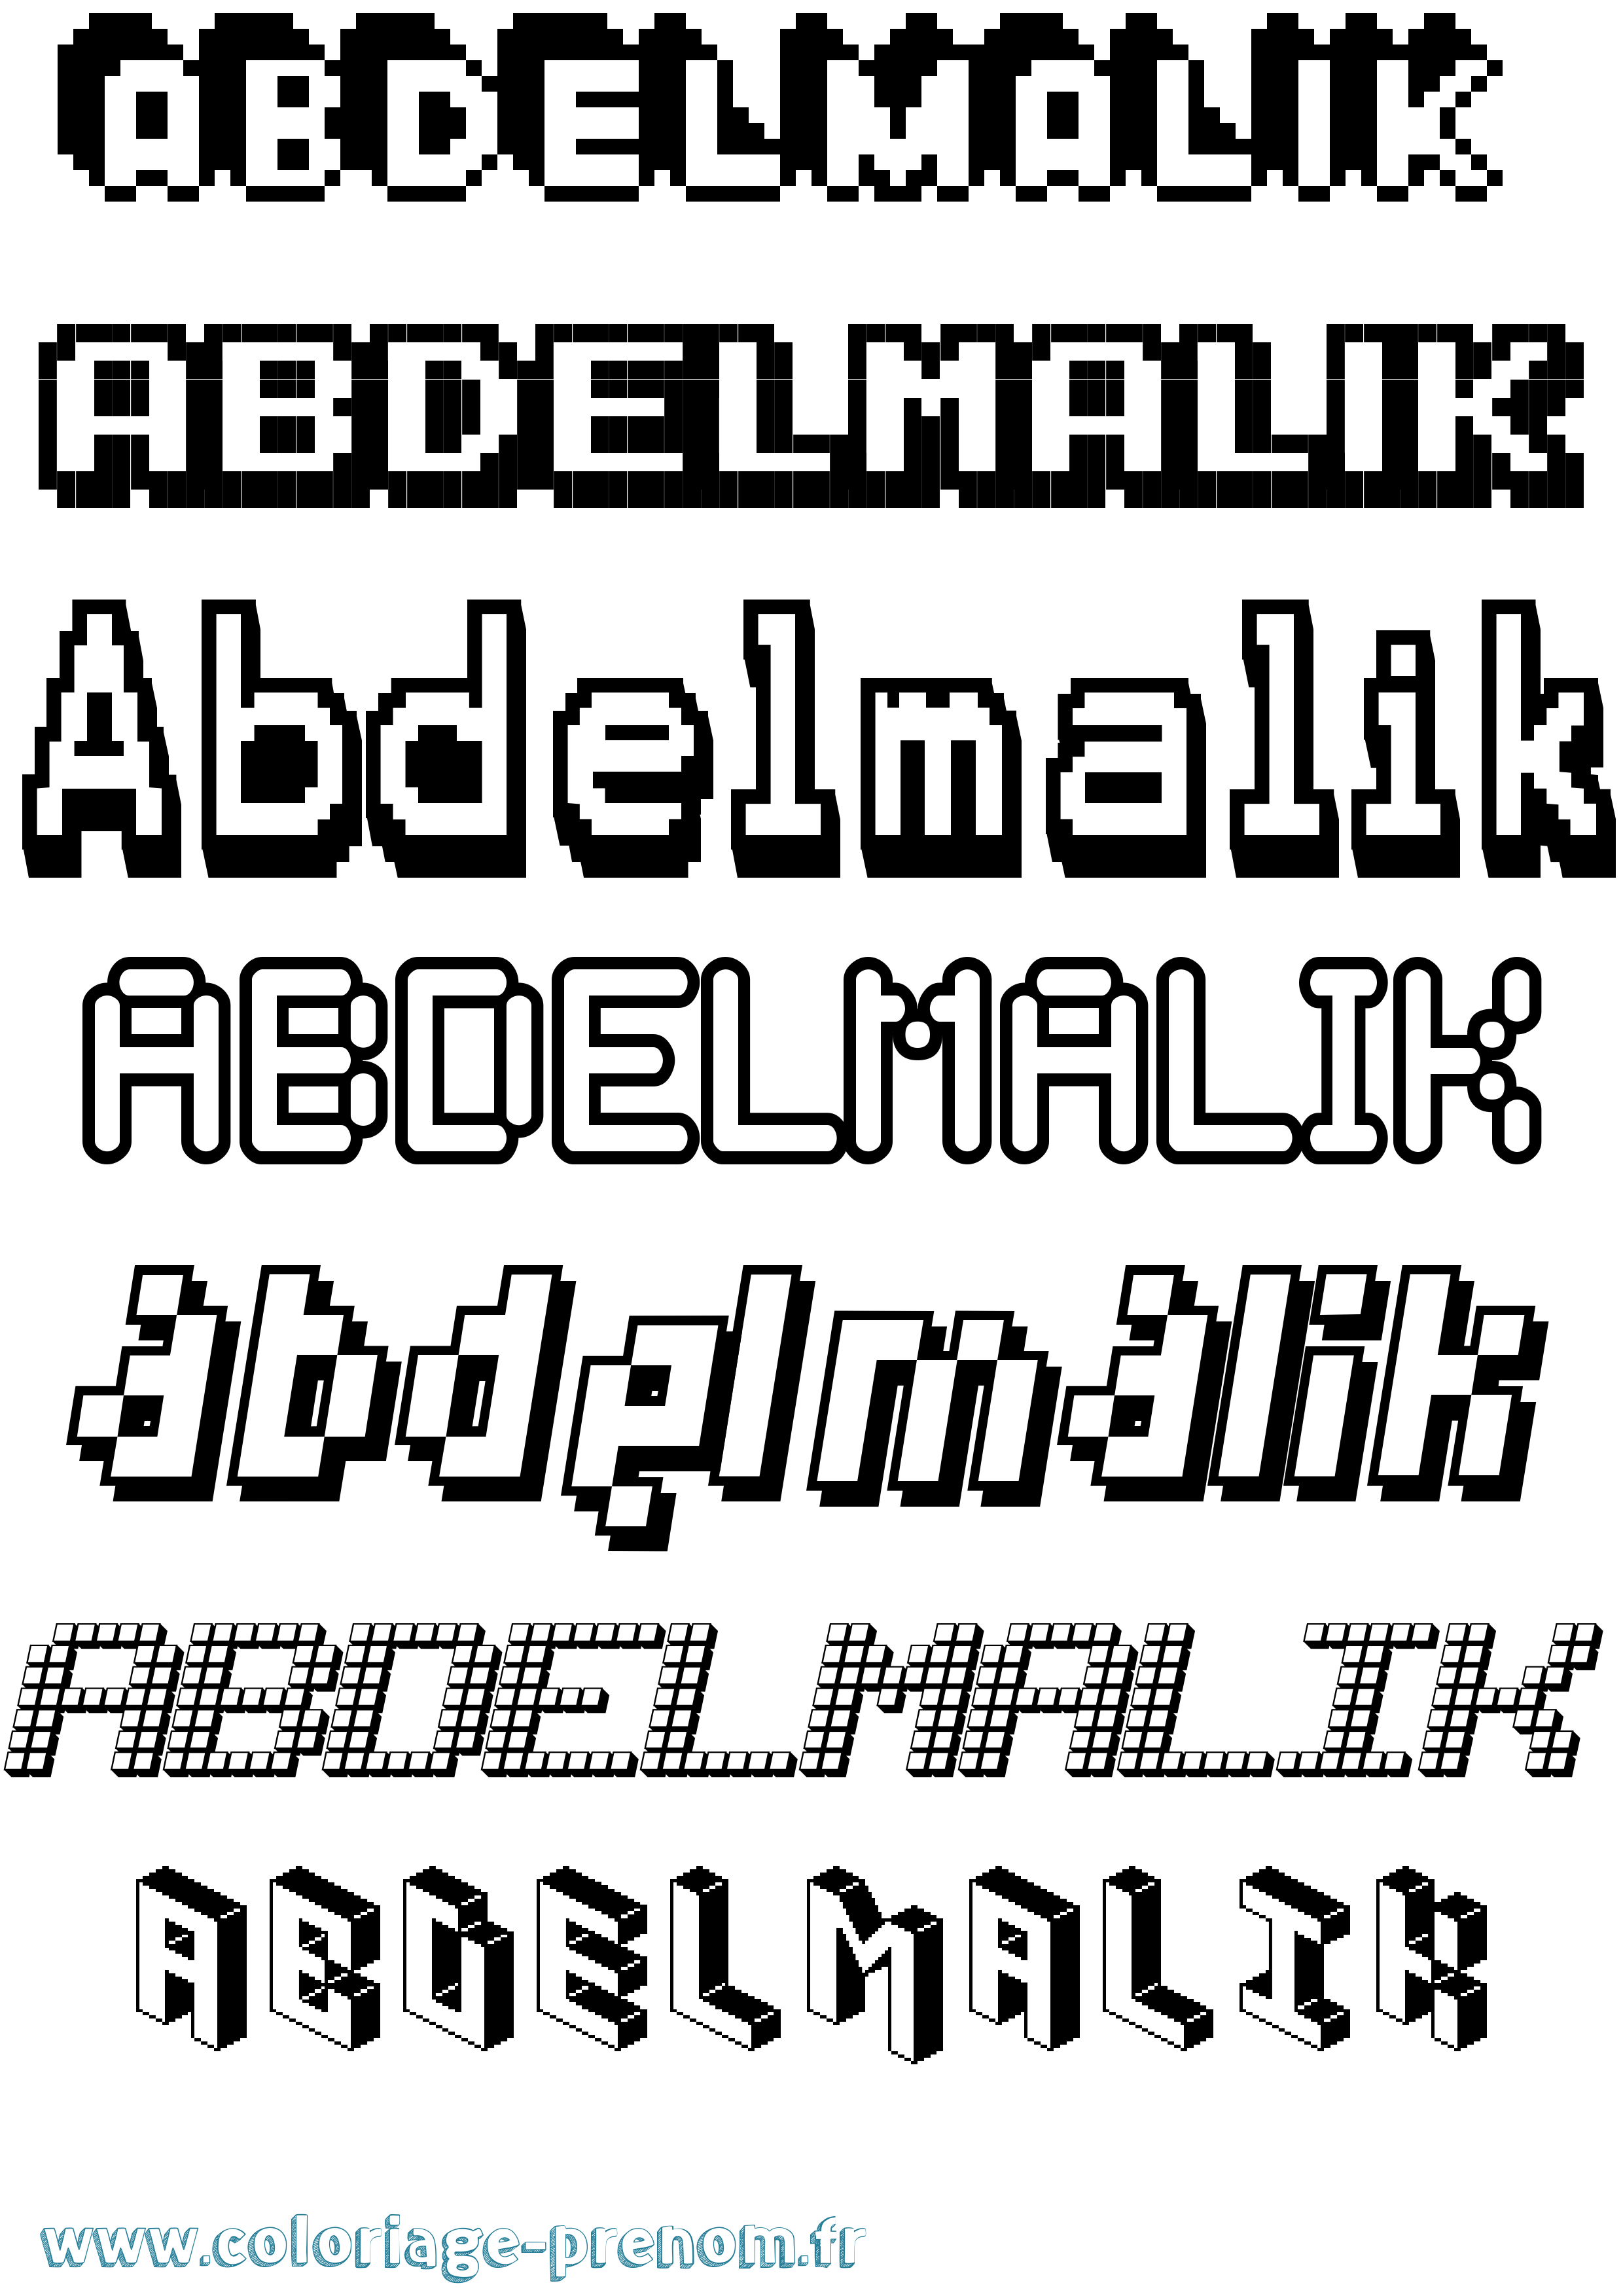 Coloriage prénom Abdelmalik Pixel